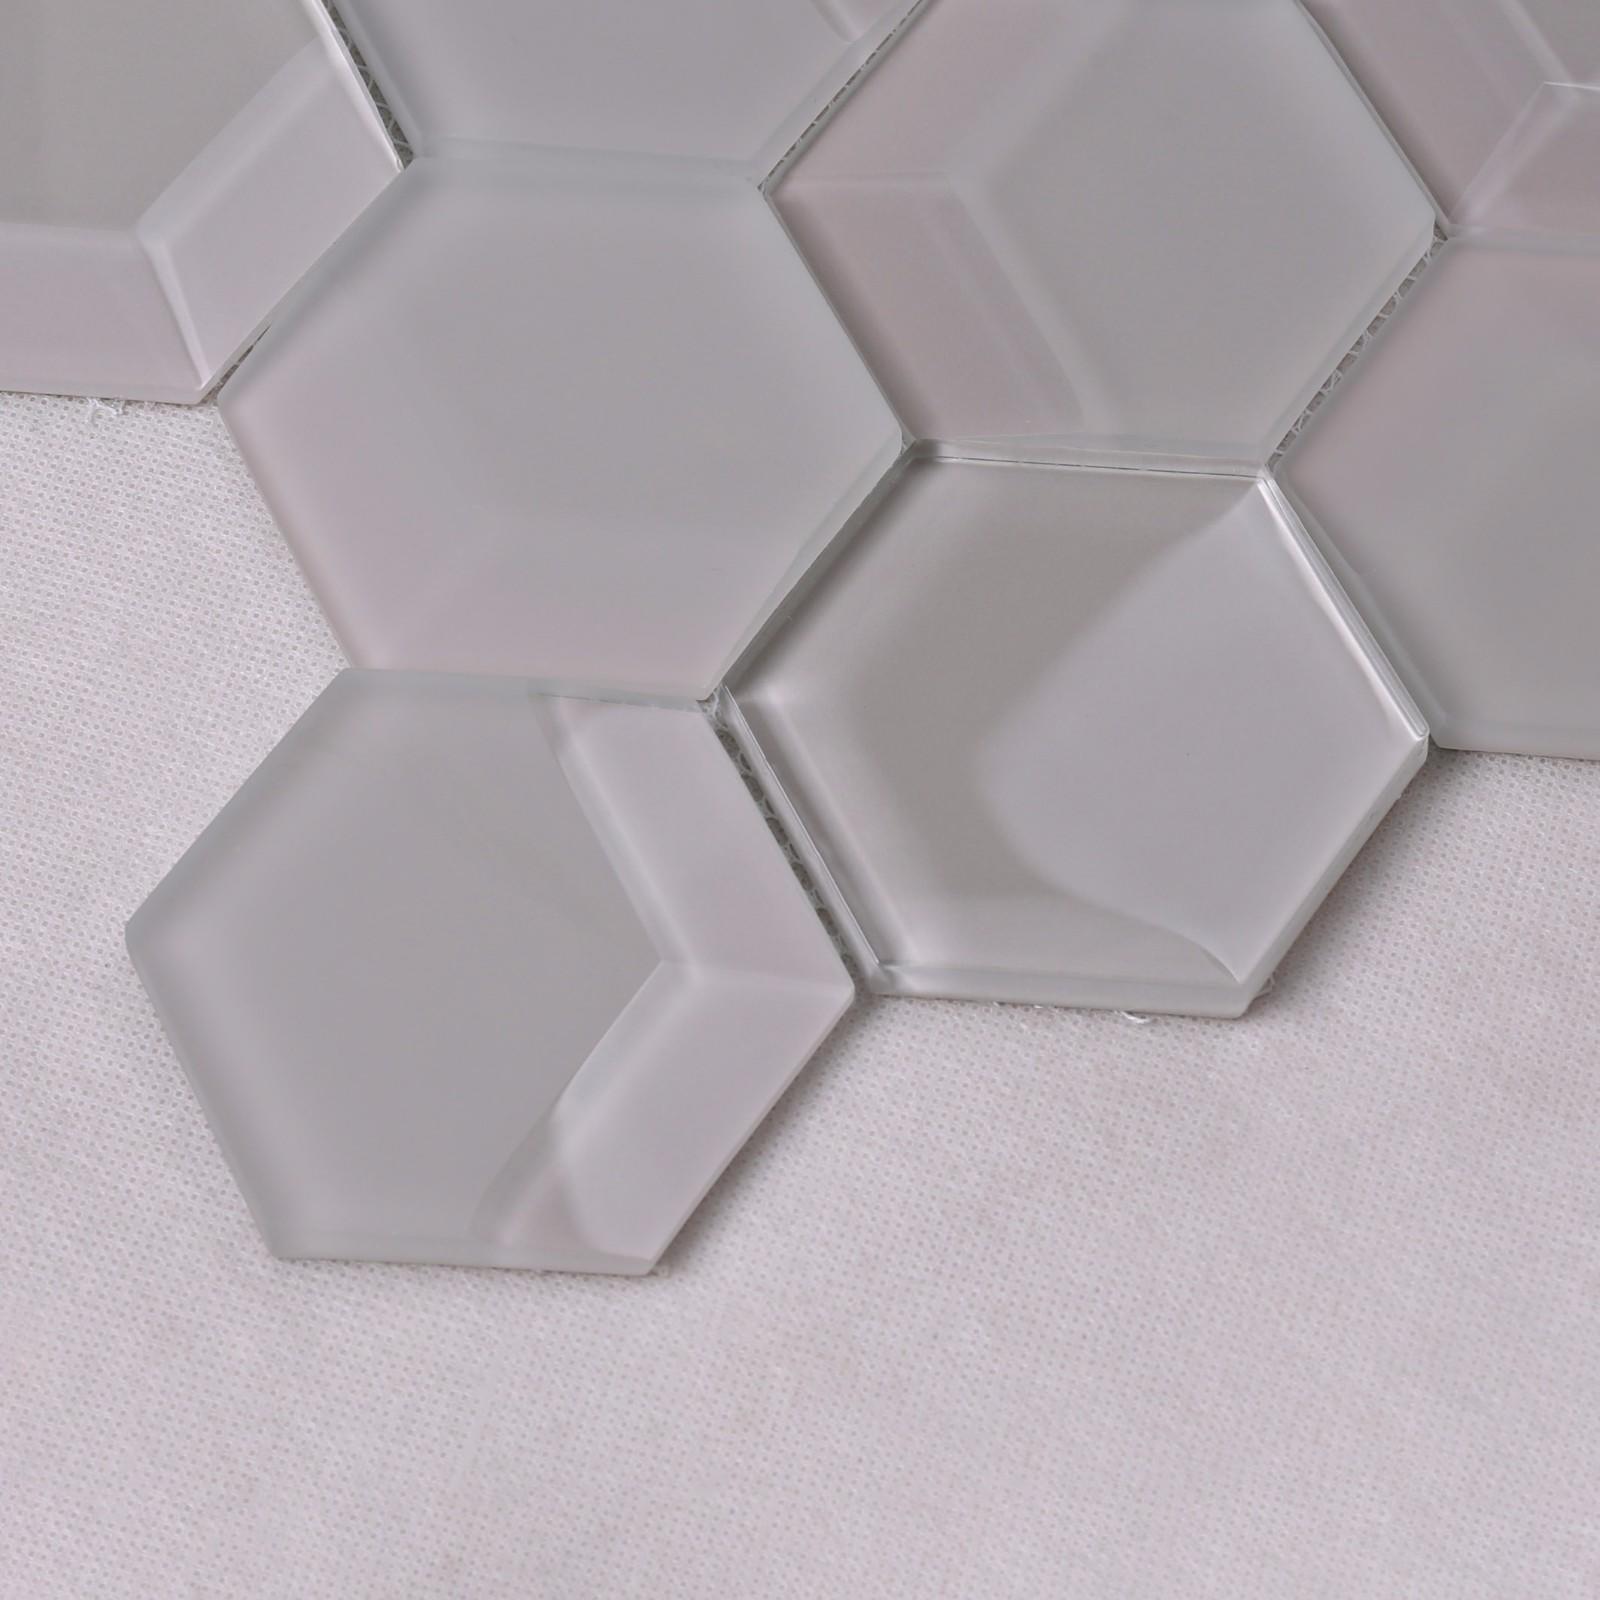 Heng Xing tans white glass metal backsplash supplier for kitchen